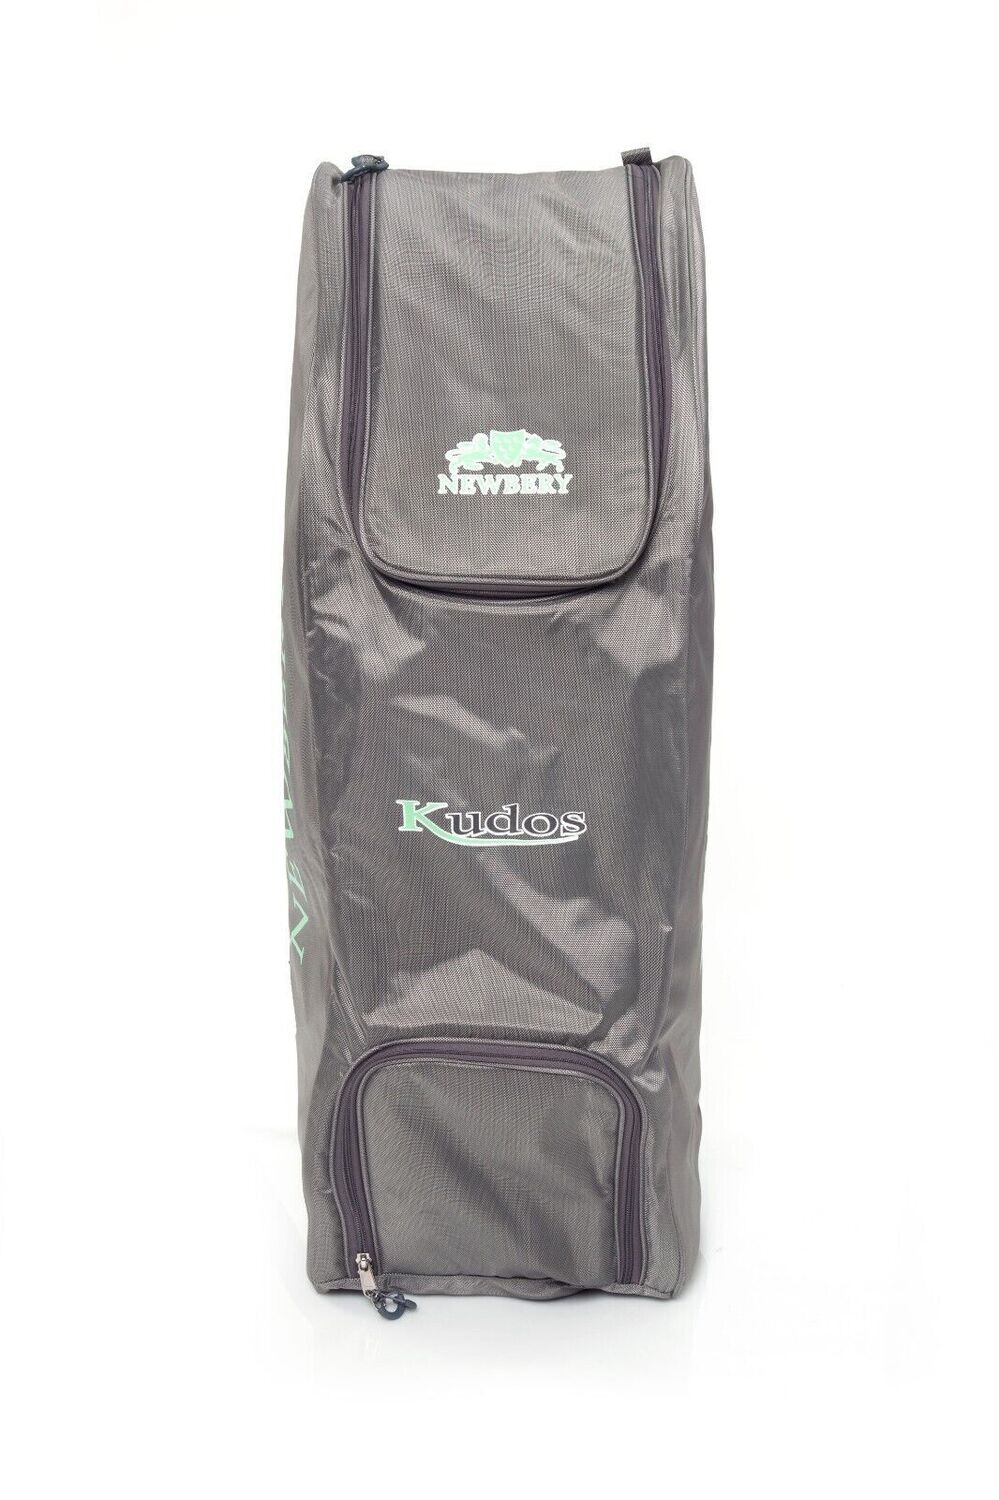 2024 Newbery Kudos Duffle Cricket Bag Size 71 x 28 x 30cm